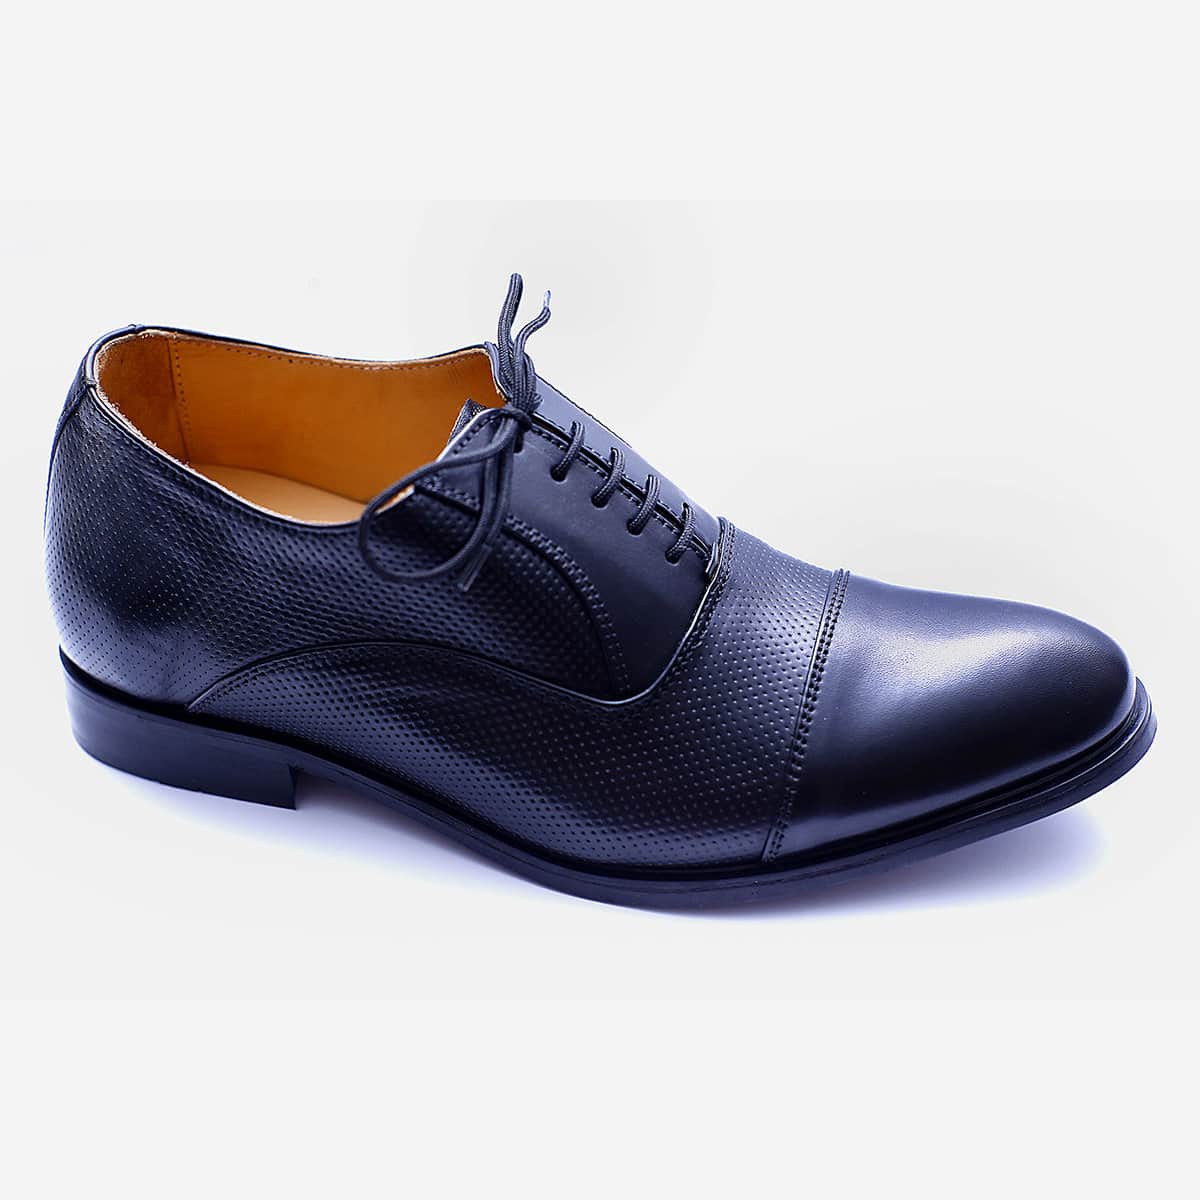 Afl93x Leather Oxford Elevator Shoes – 6.5 Cm Taller